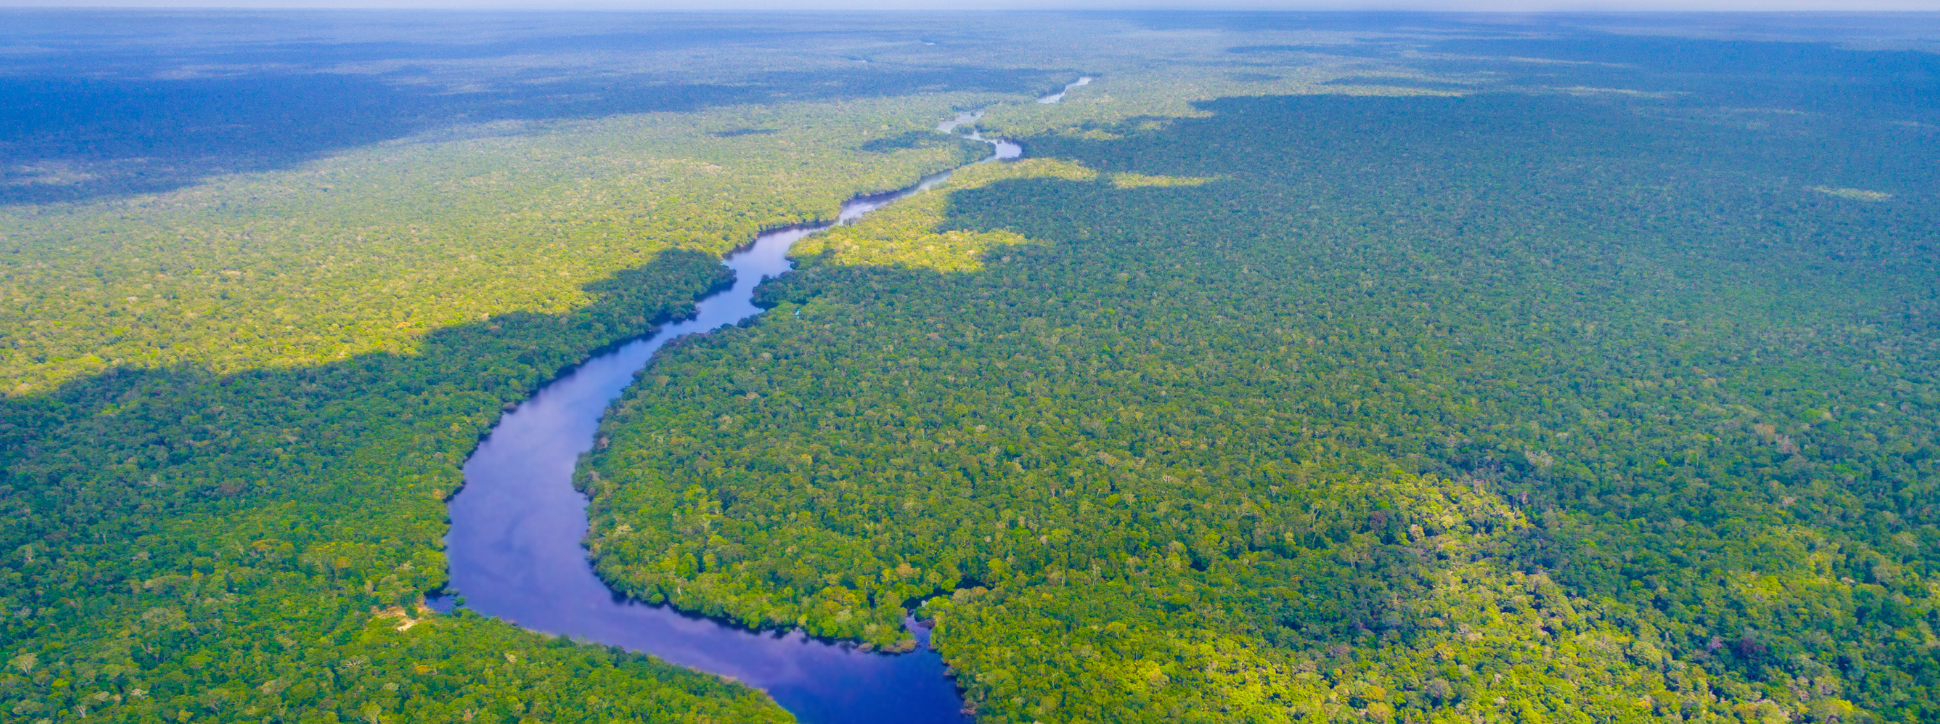 Amazone rivier valt droog